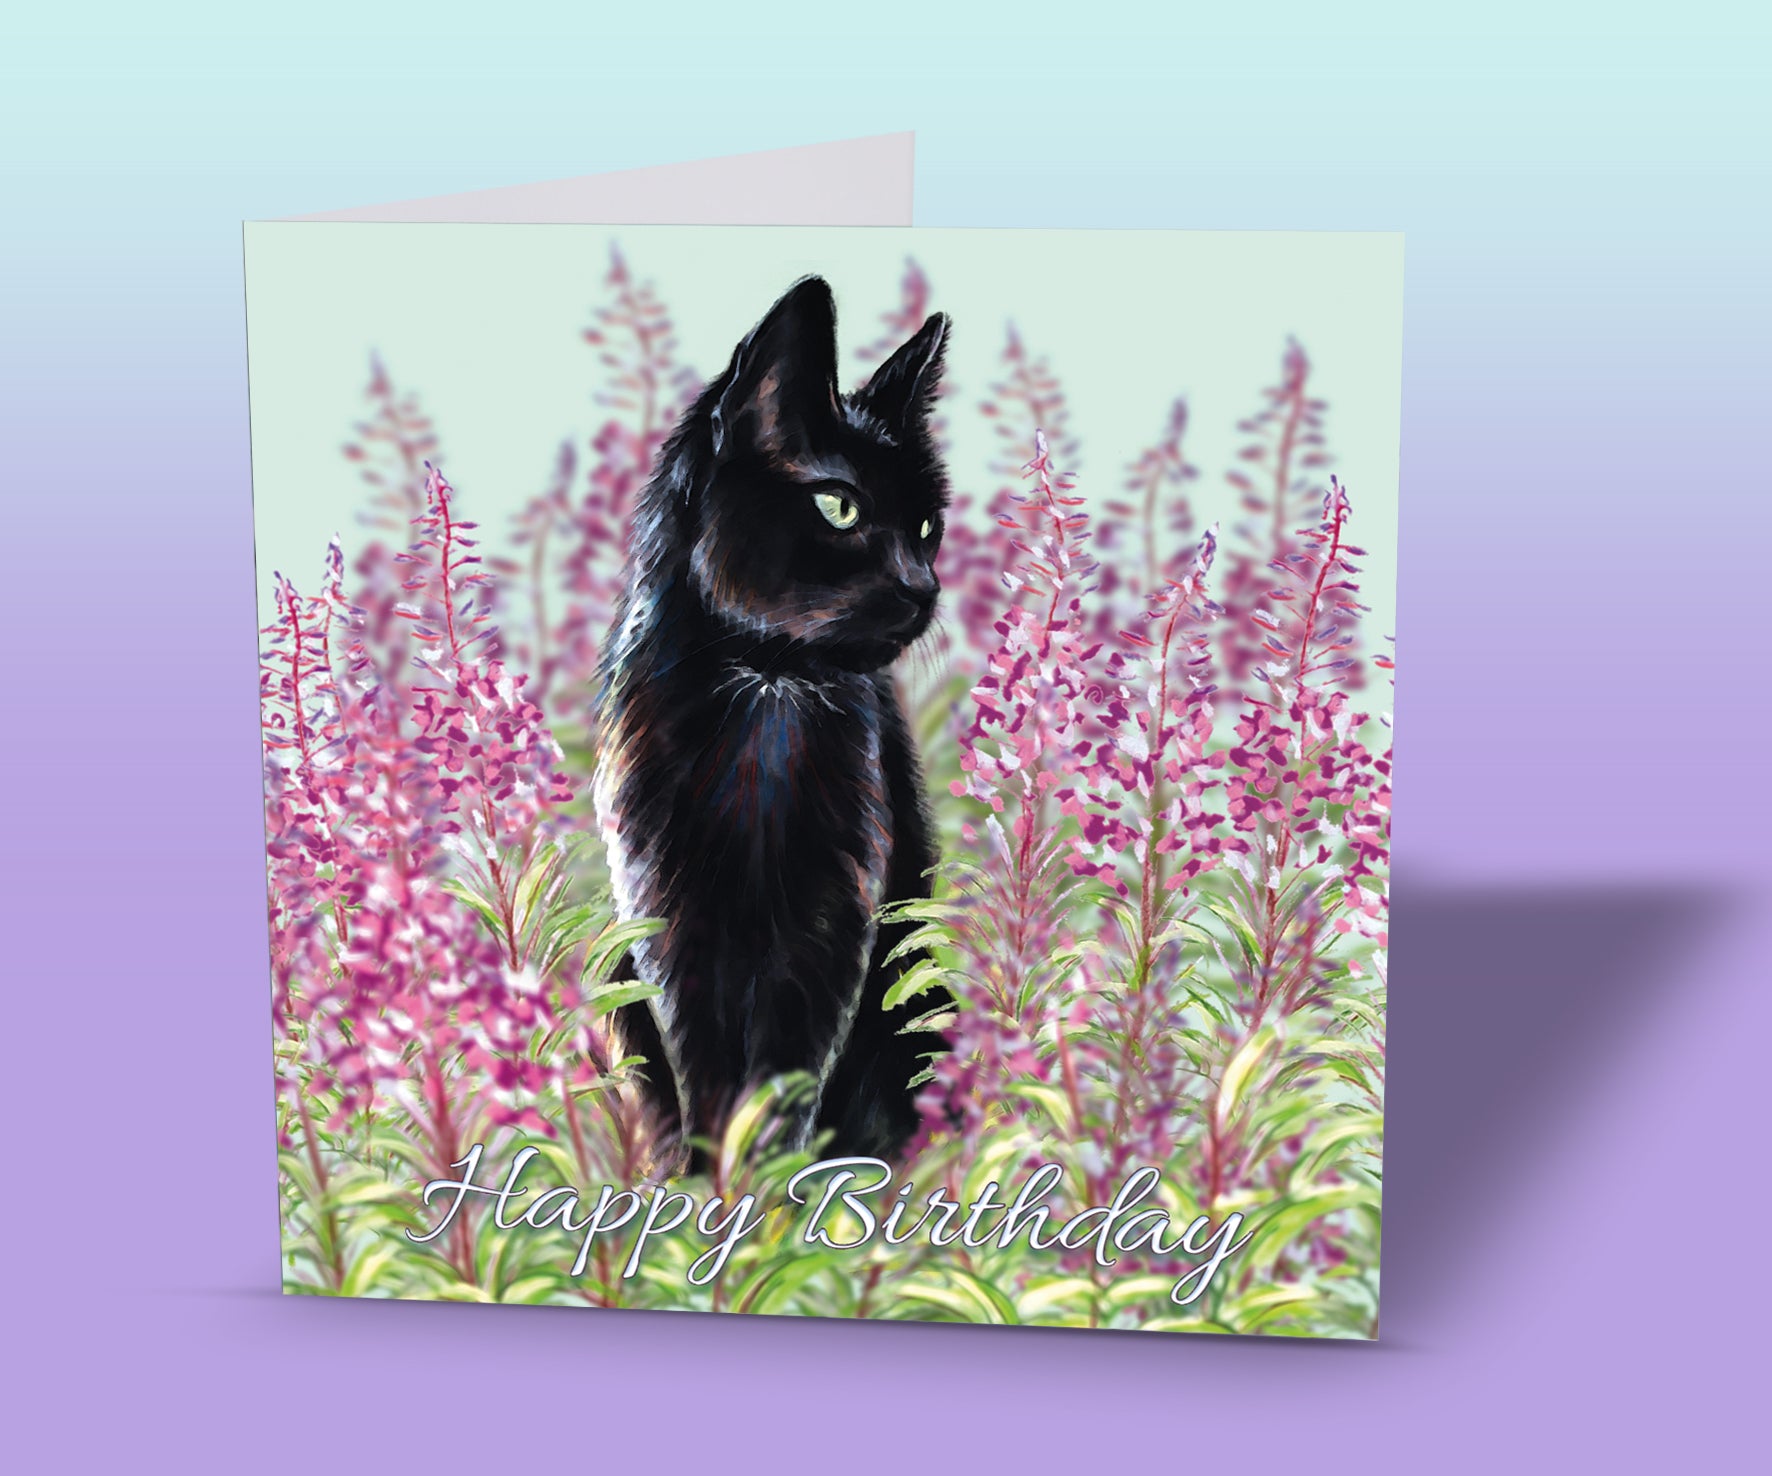 black cat birthday card